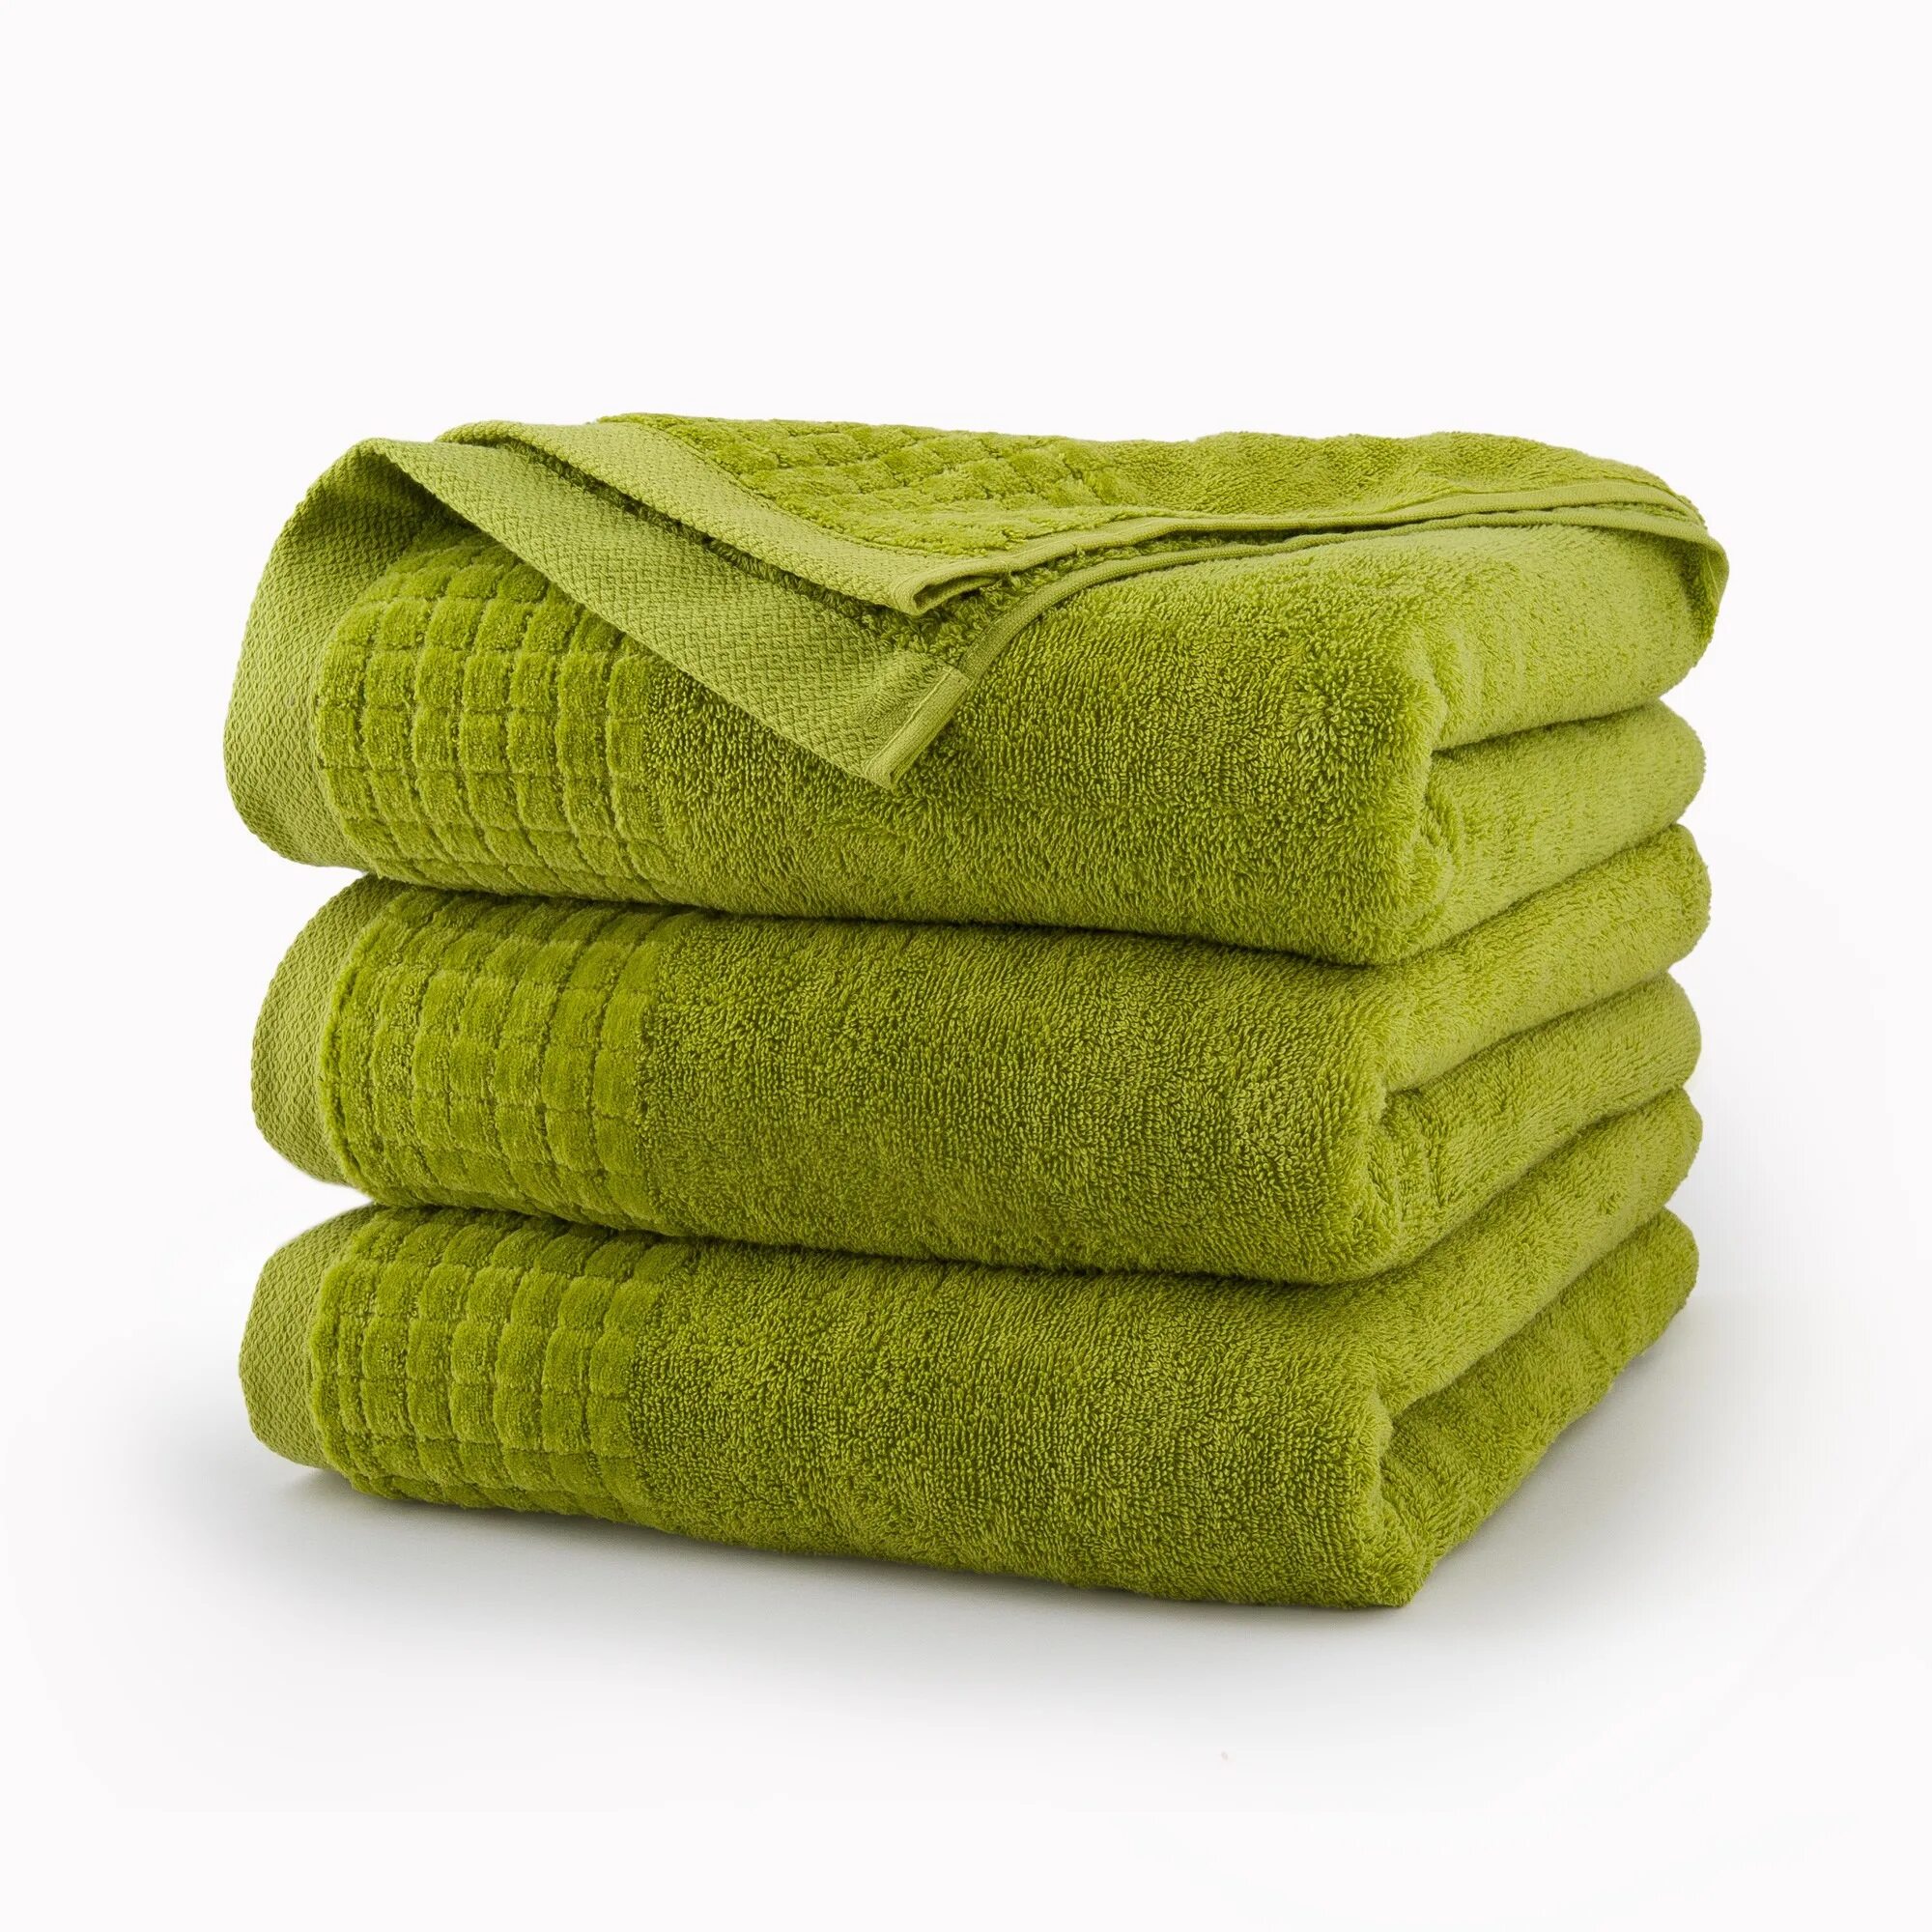 Кресла кресел полотенца полотенец. Салатовое полотенце. Зеленое полотенце. Полотенце махровое зеленый. Сложенные полотенца.